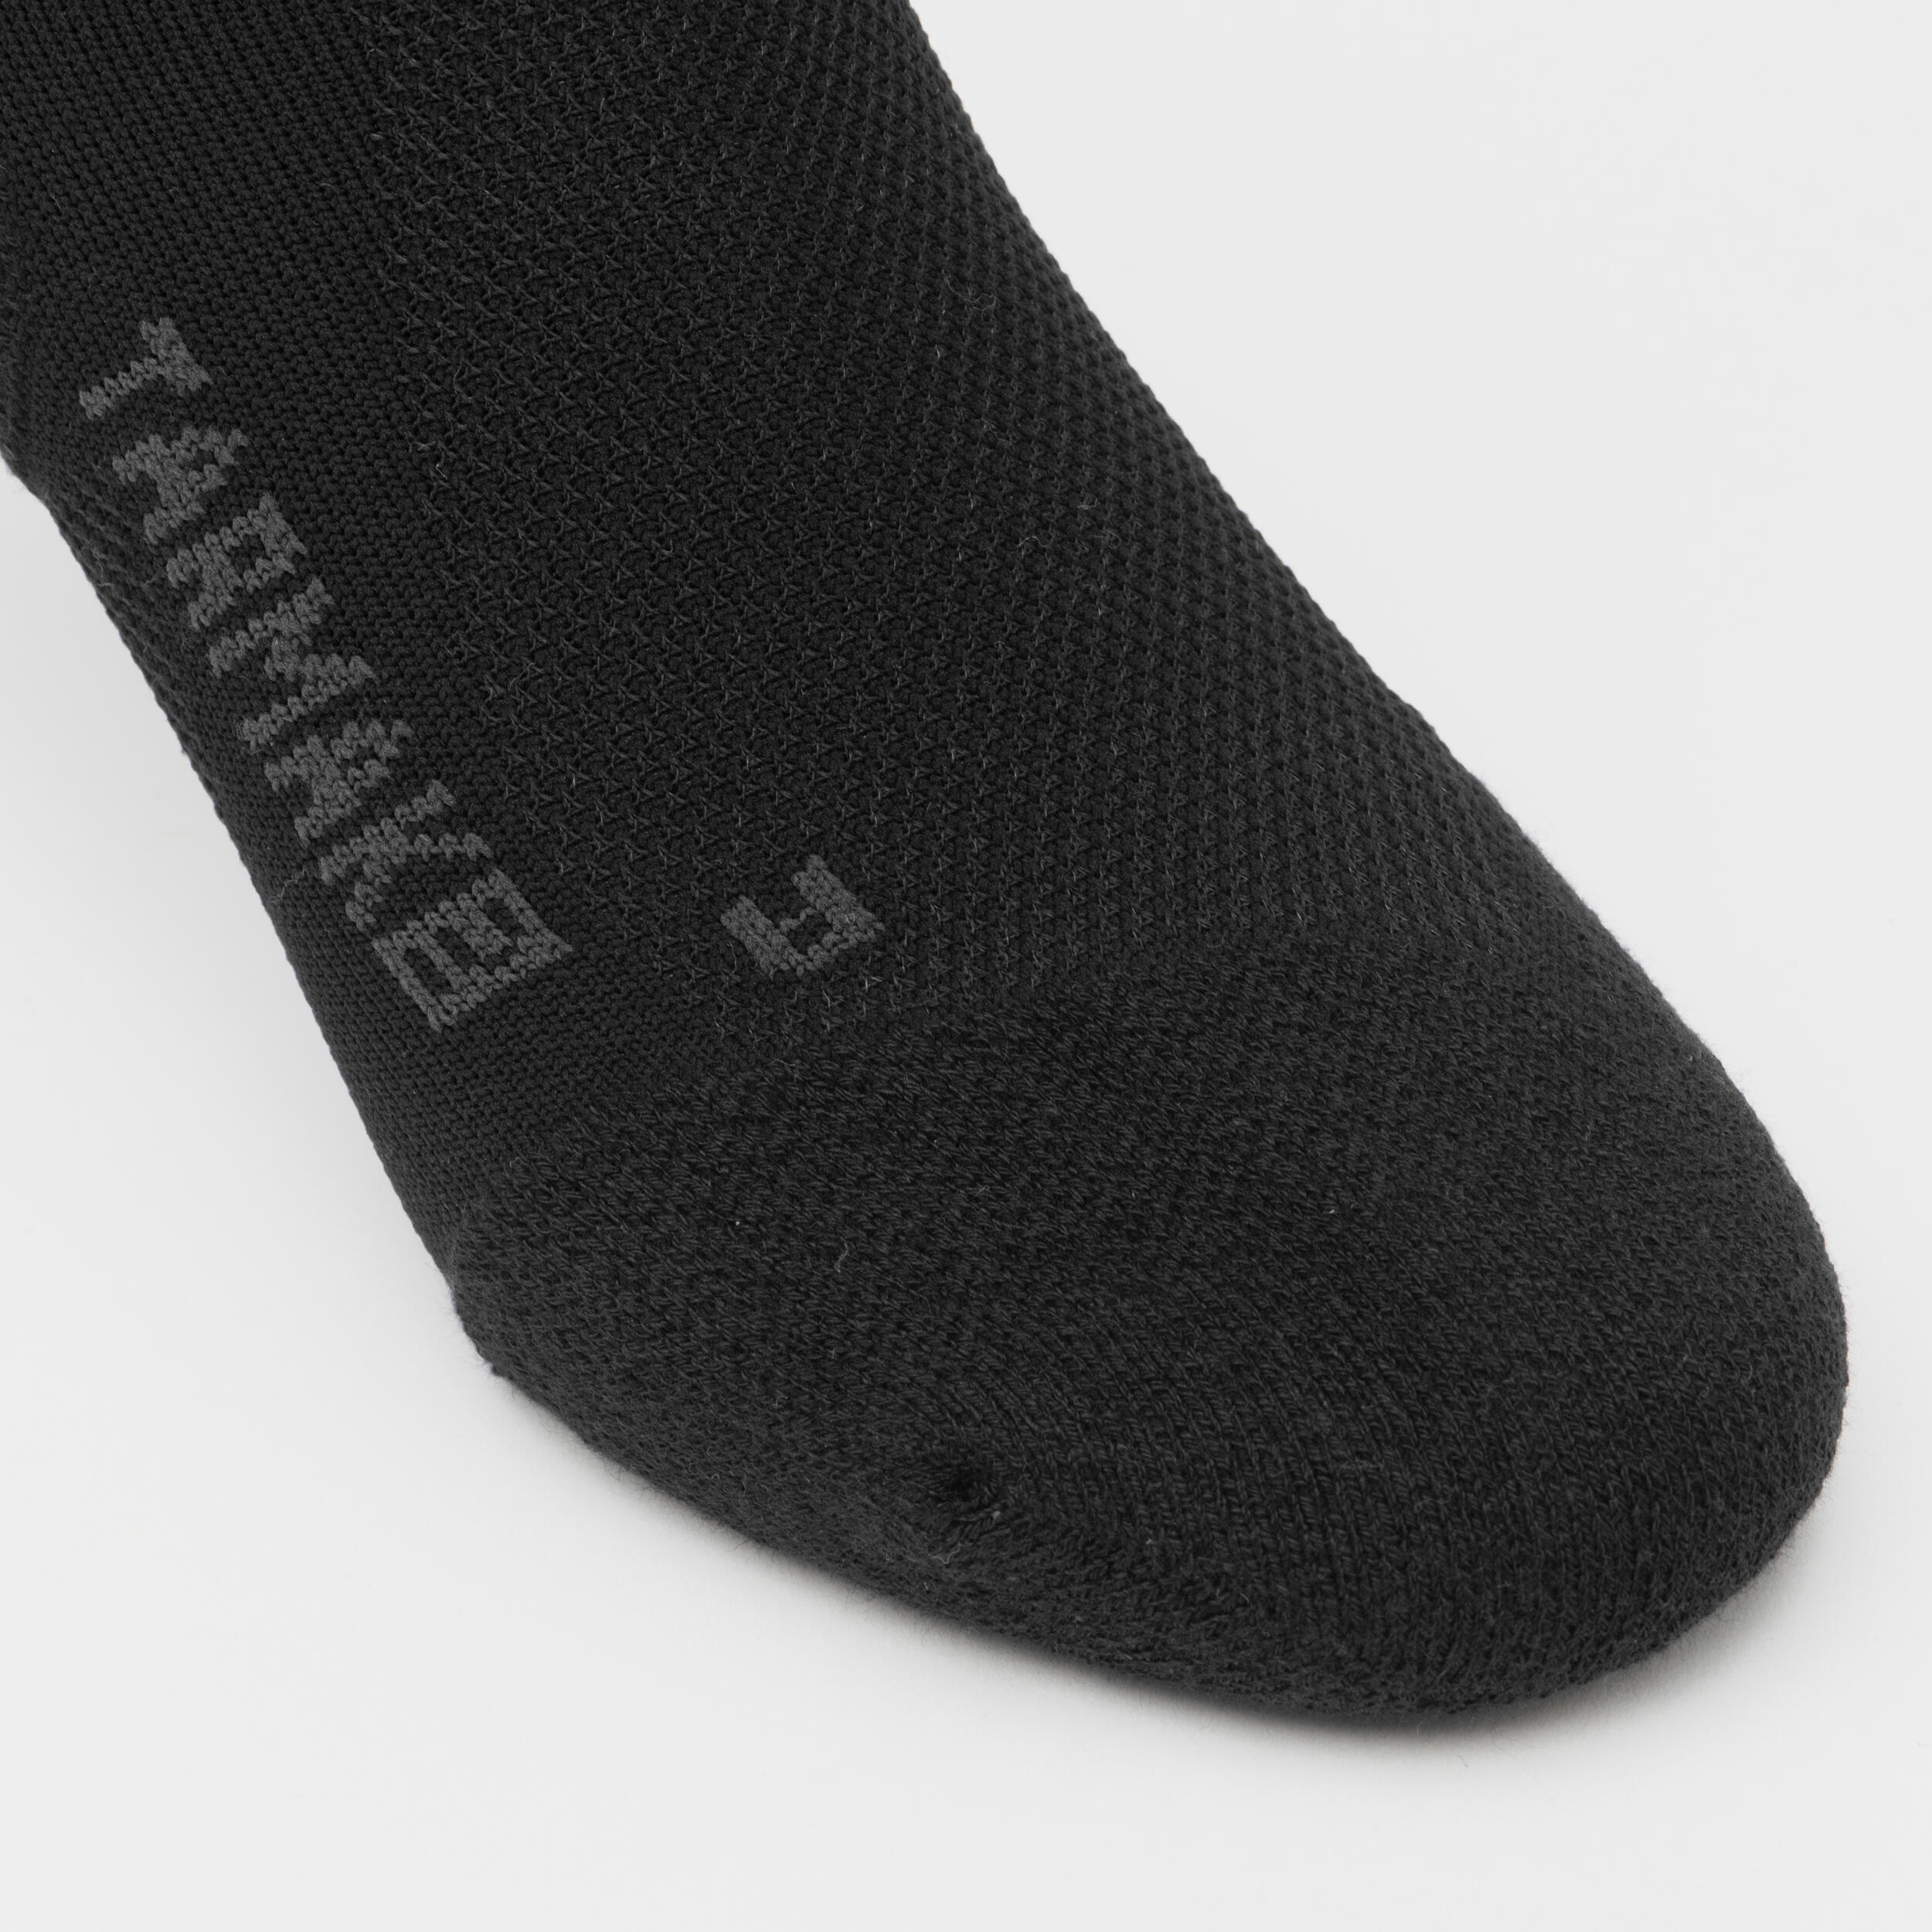 Men's/Women's Low-Rise NBA Basketball Socks SO900 Twin-Pack - Black 6/6